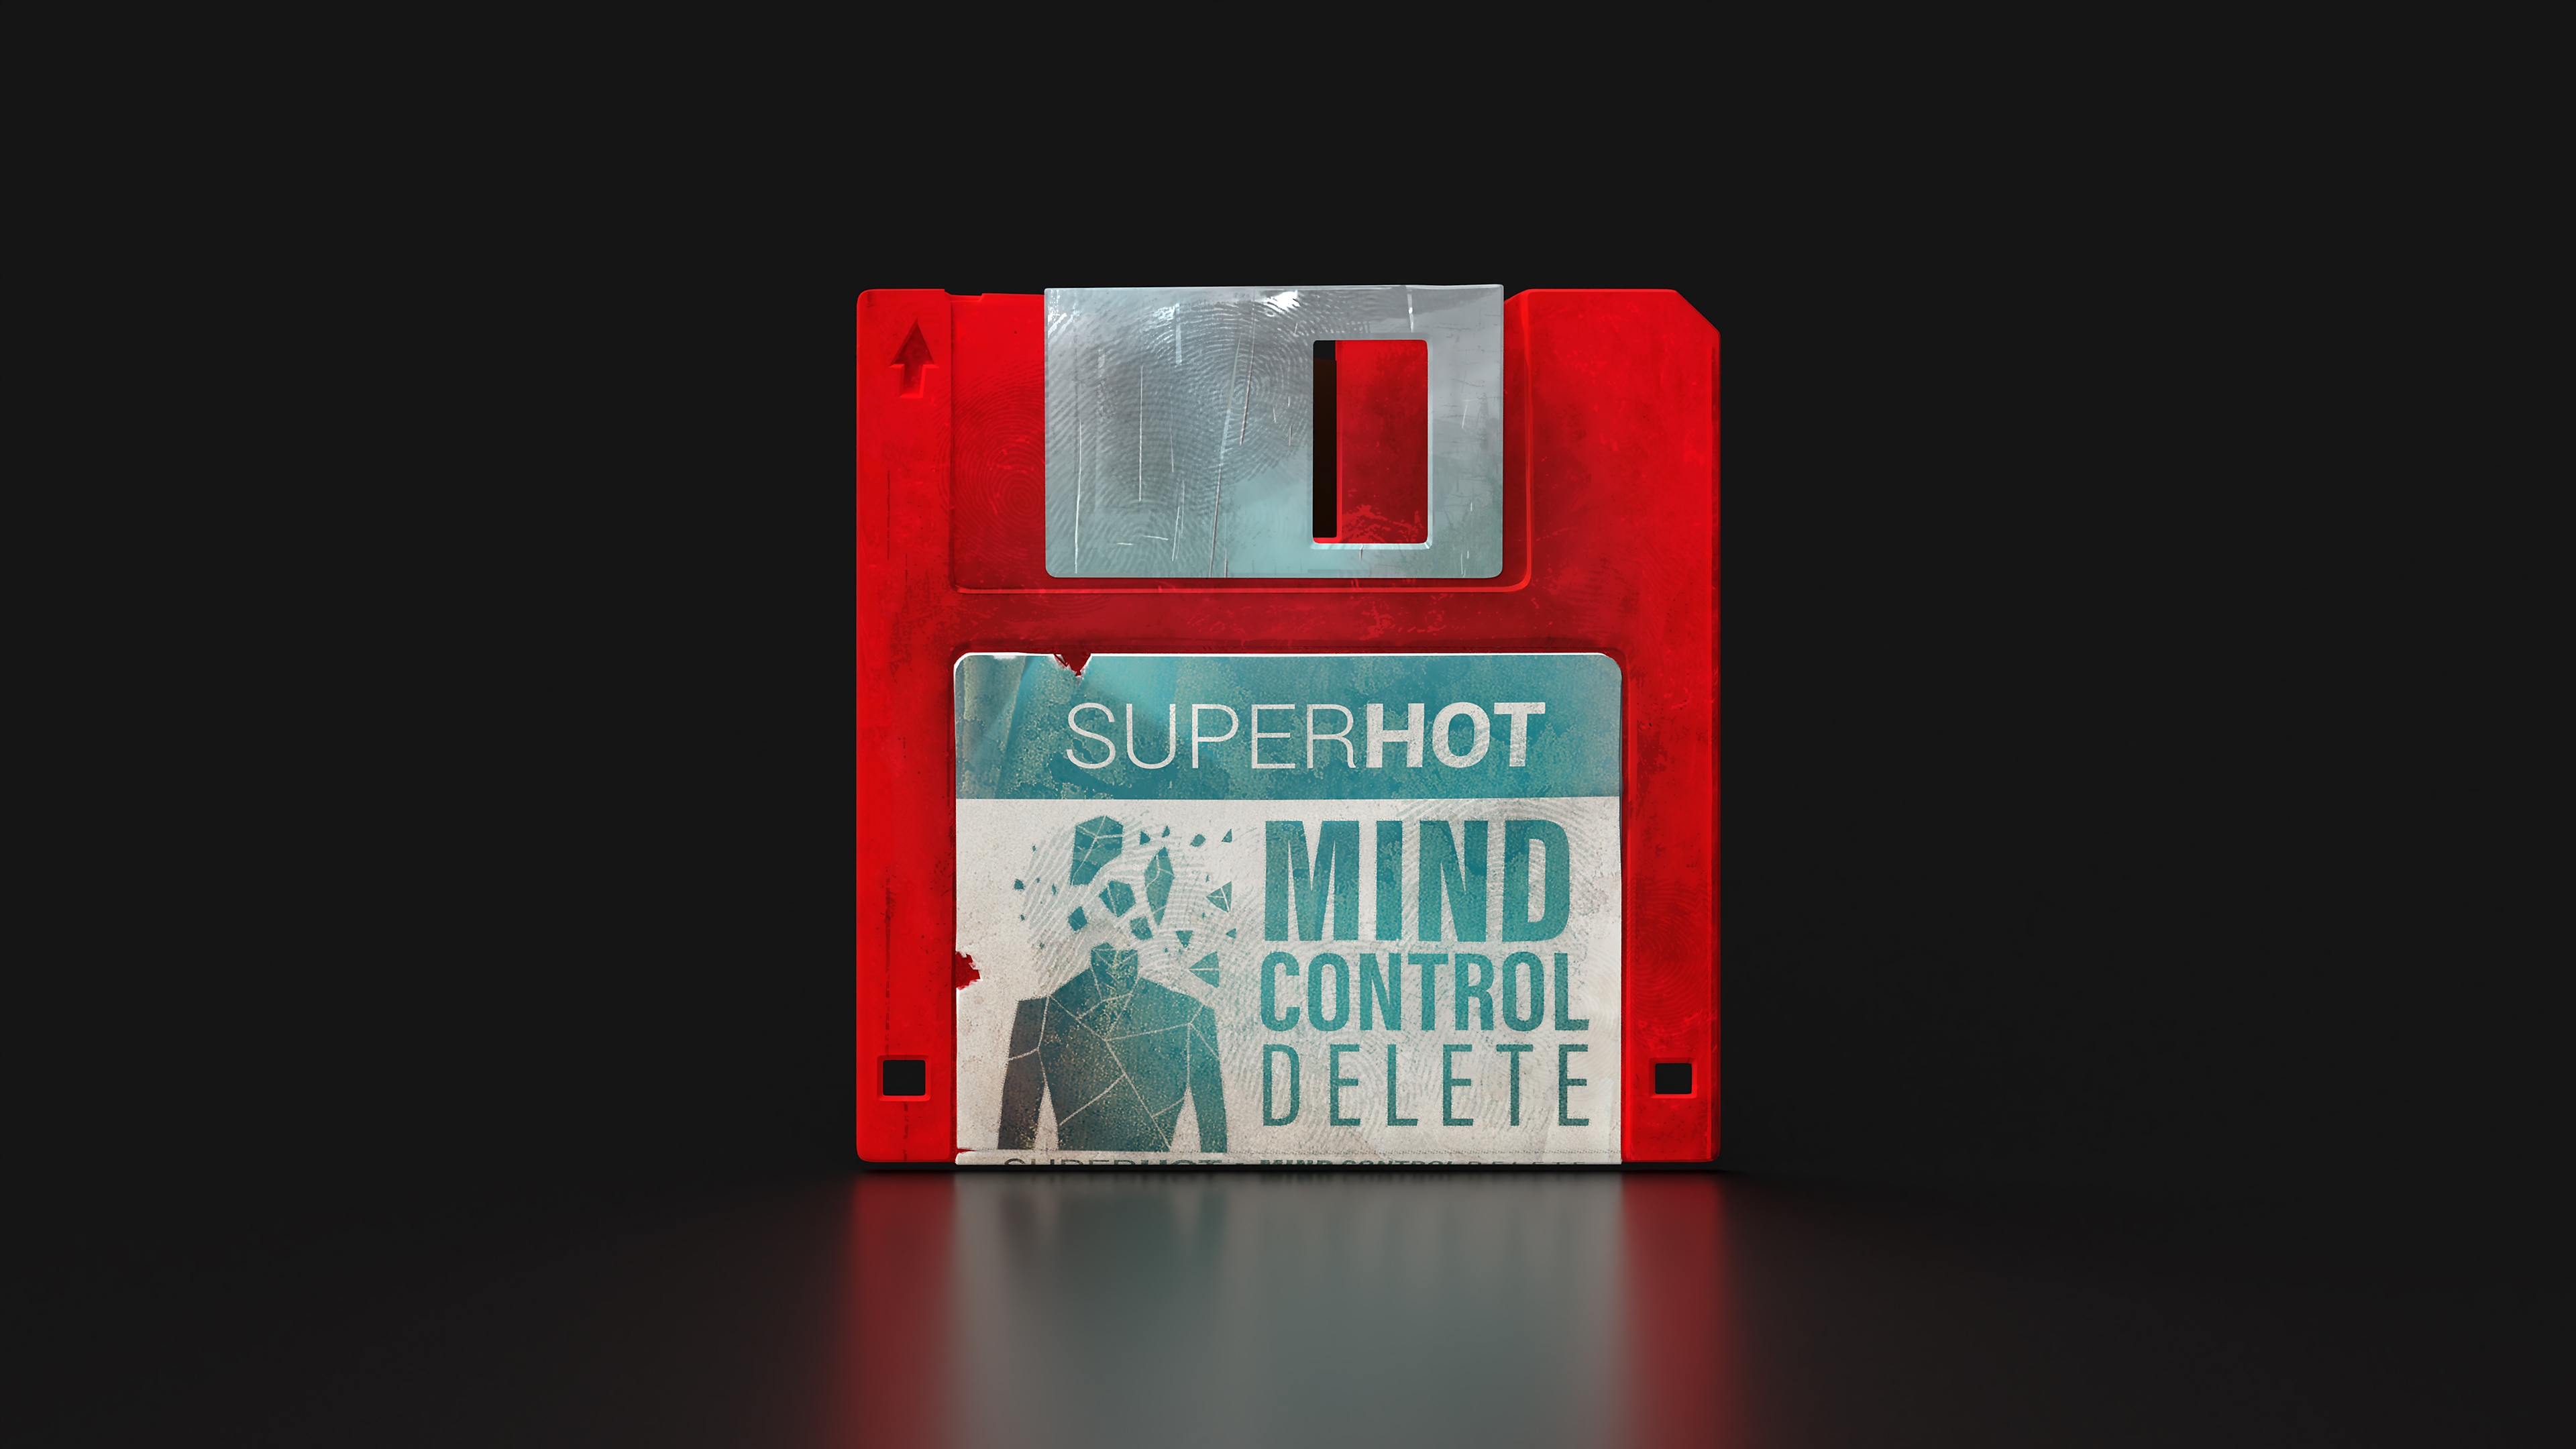 SUPERHOT: MIND CONTROL DELETE เดสก์ท็อป